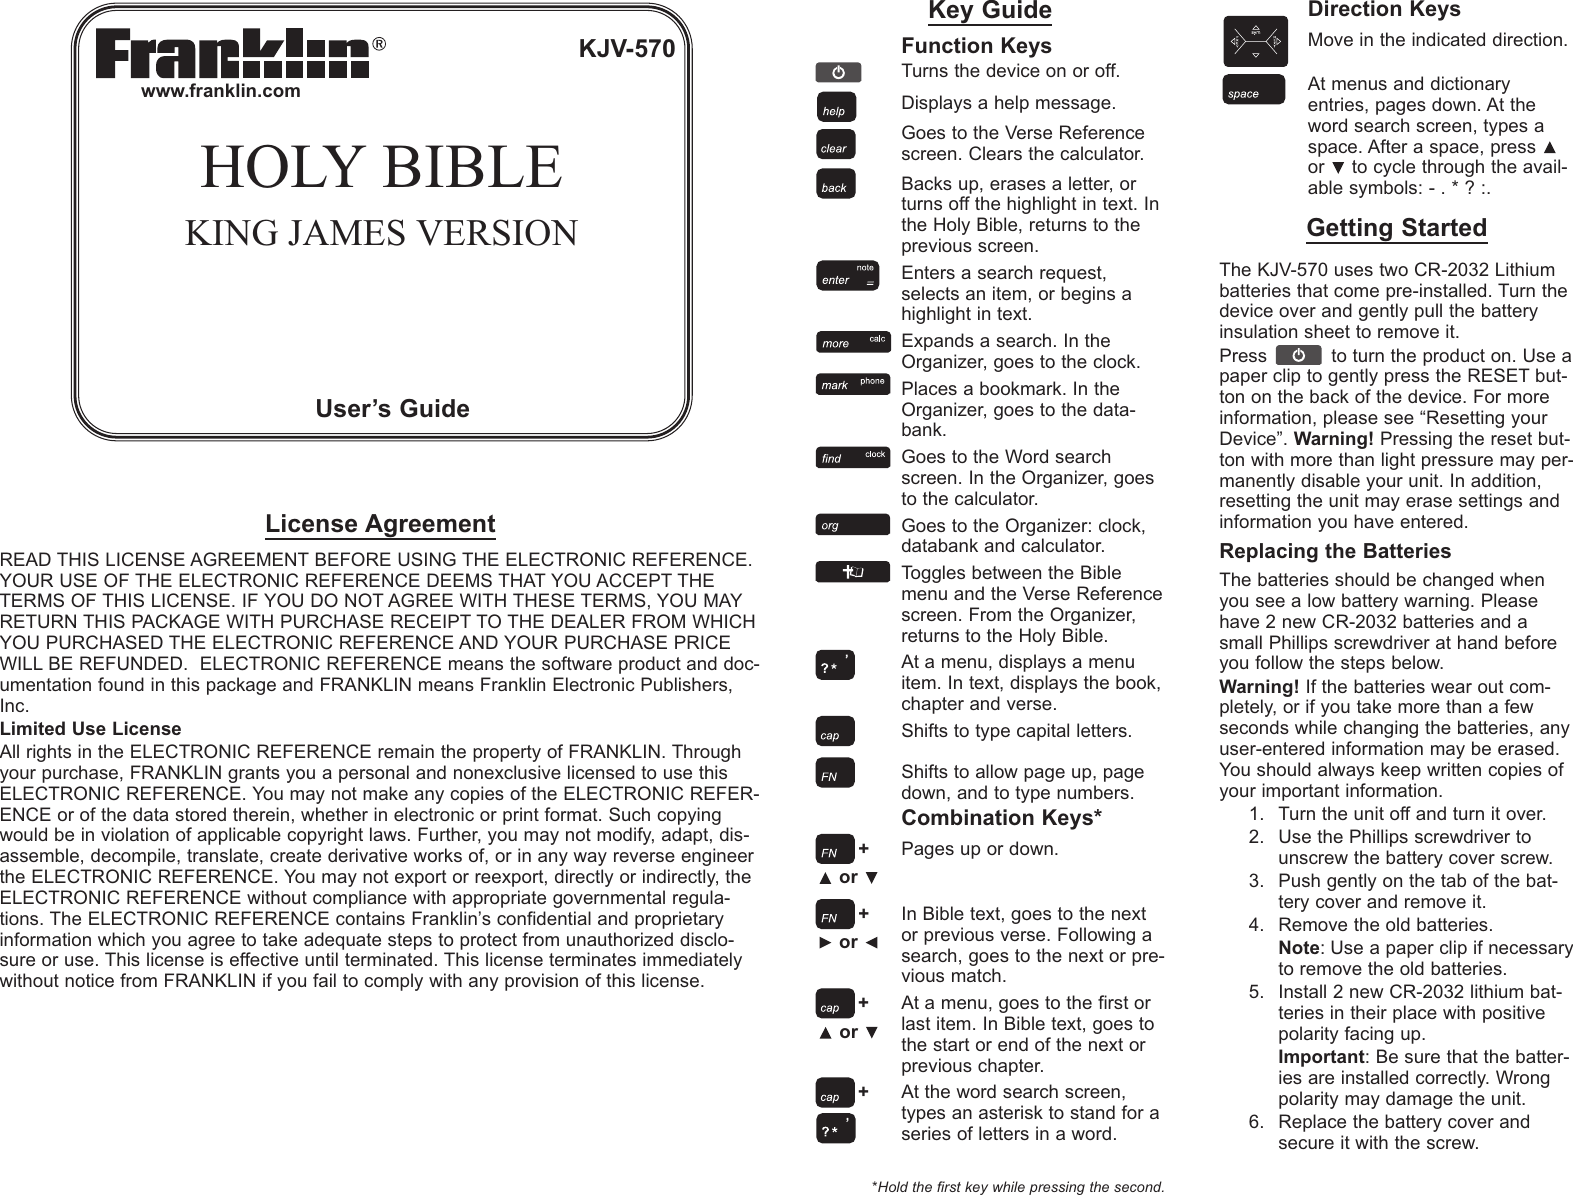 Page 1 of 7 - Franklin Franklin-Electronic-King-James-Version-Bible-Kjv570-Users-Manual- Kjv-570_forweb  Franklin-electronic-king-james-version-bible-kjv570-users-manual